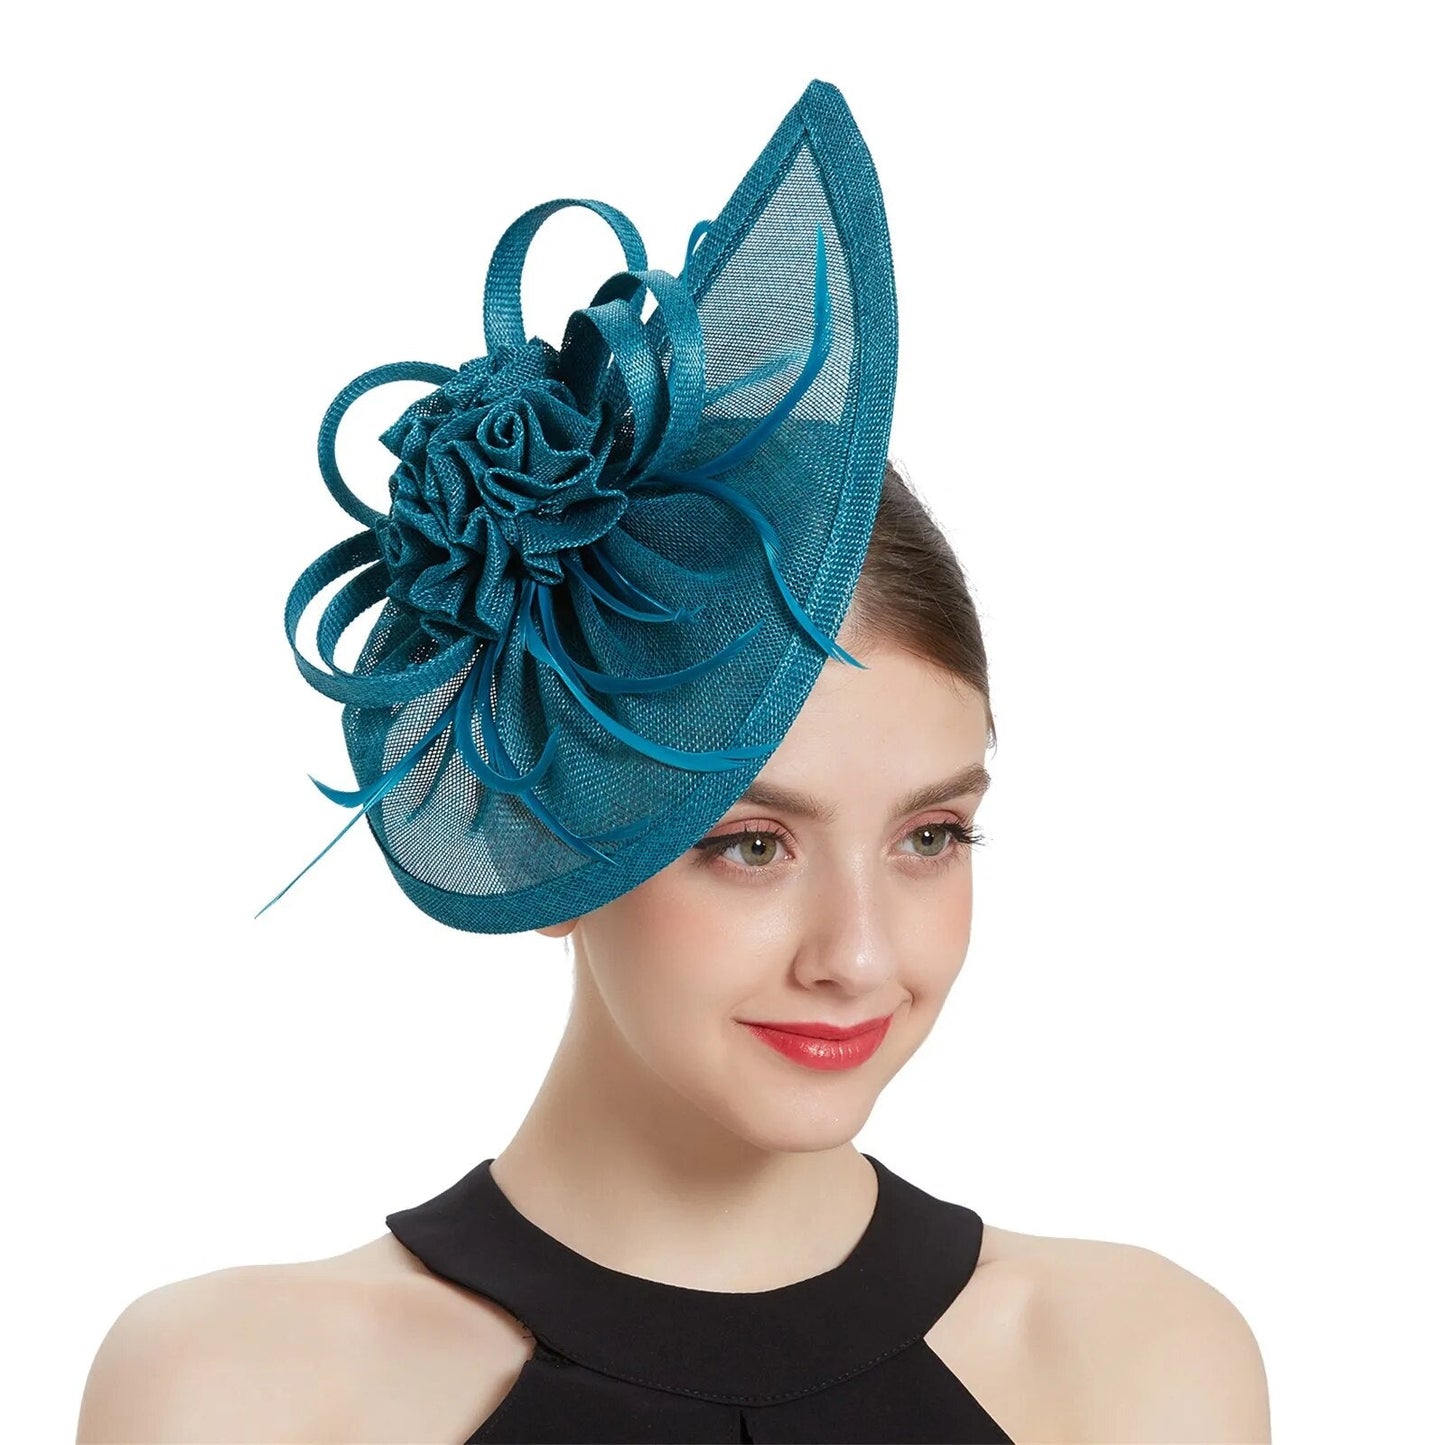 Londonisy Women Fascinator Headwear Wedding Party Hair Accessories-fascinator-Lake Blue-All10dollars.com